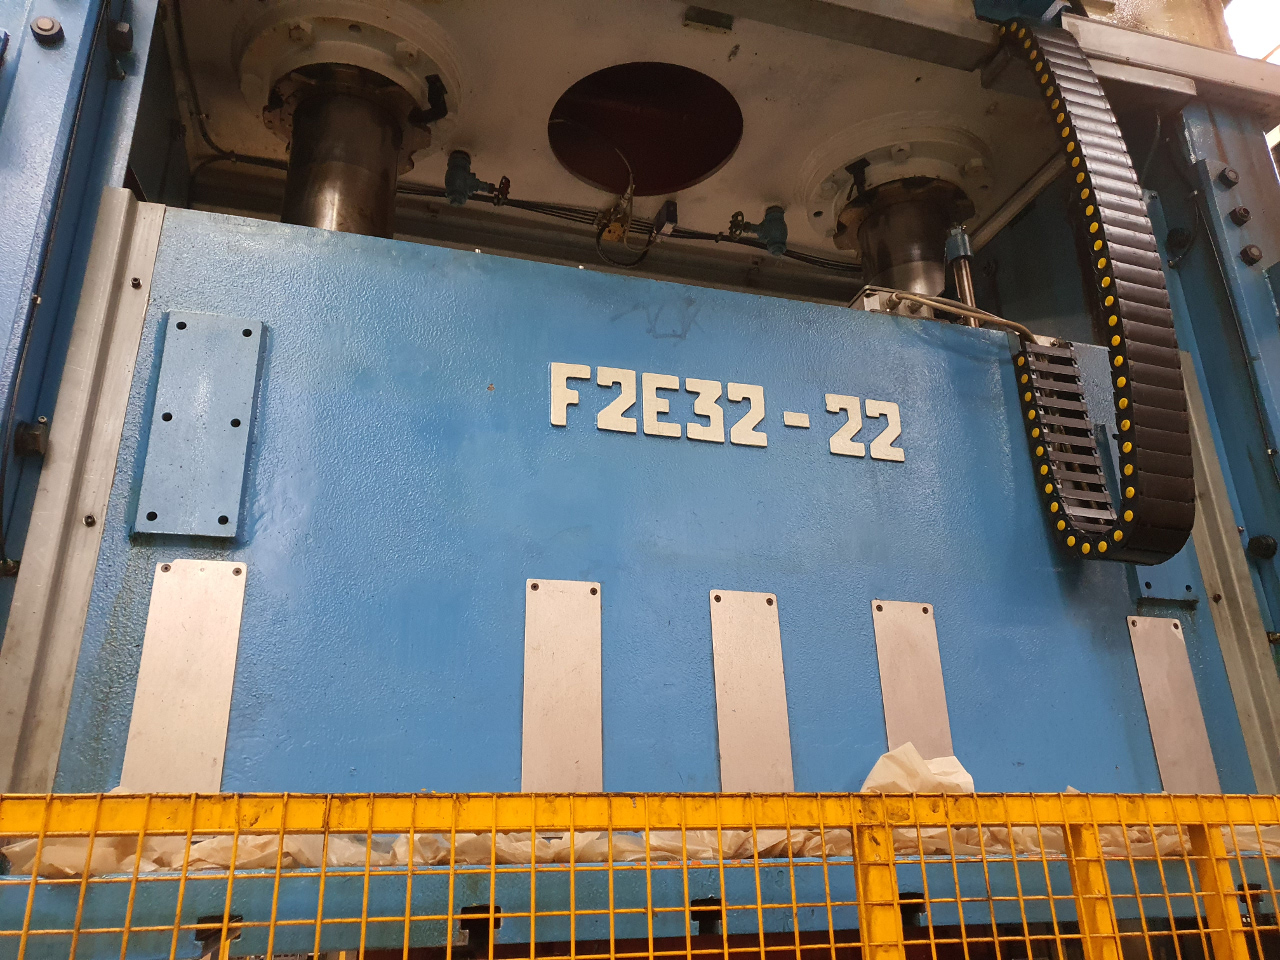 Prensa hidráulica Spiertz 320 t PR2486, utilizada